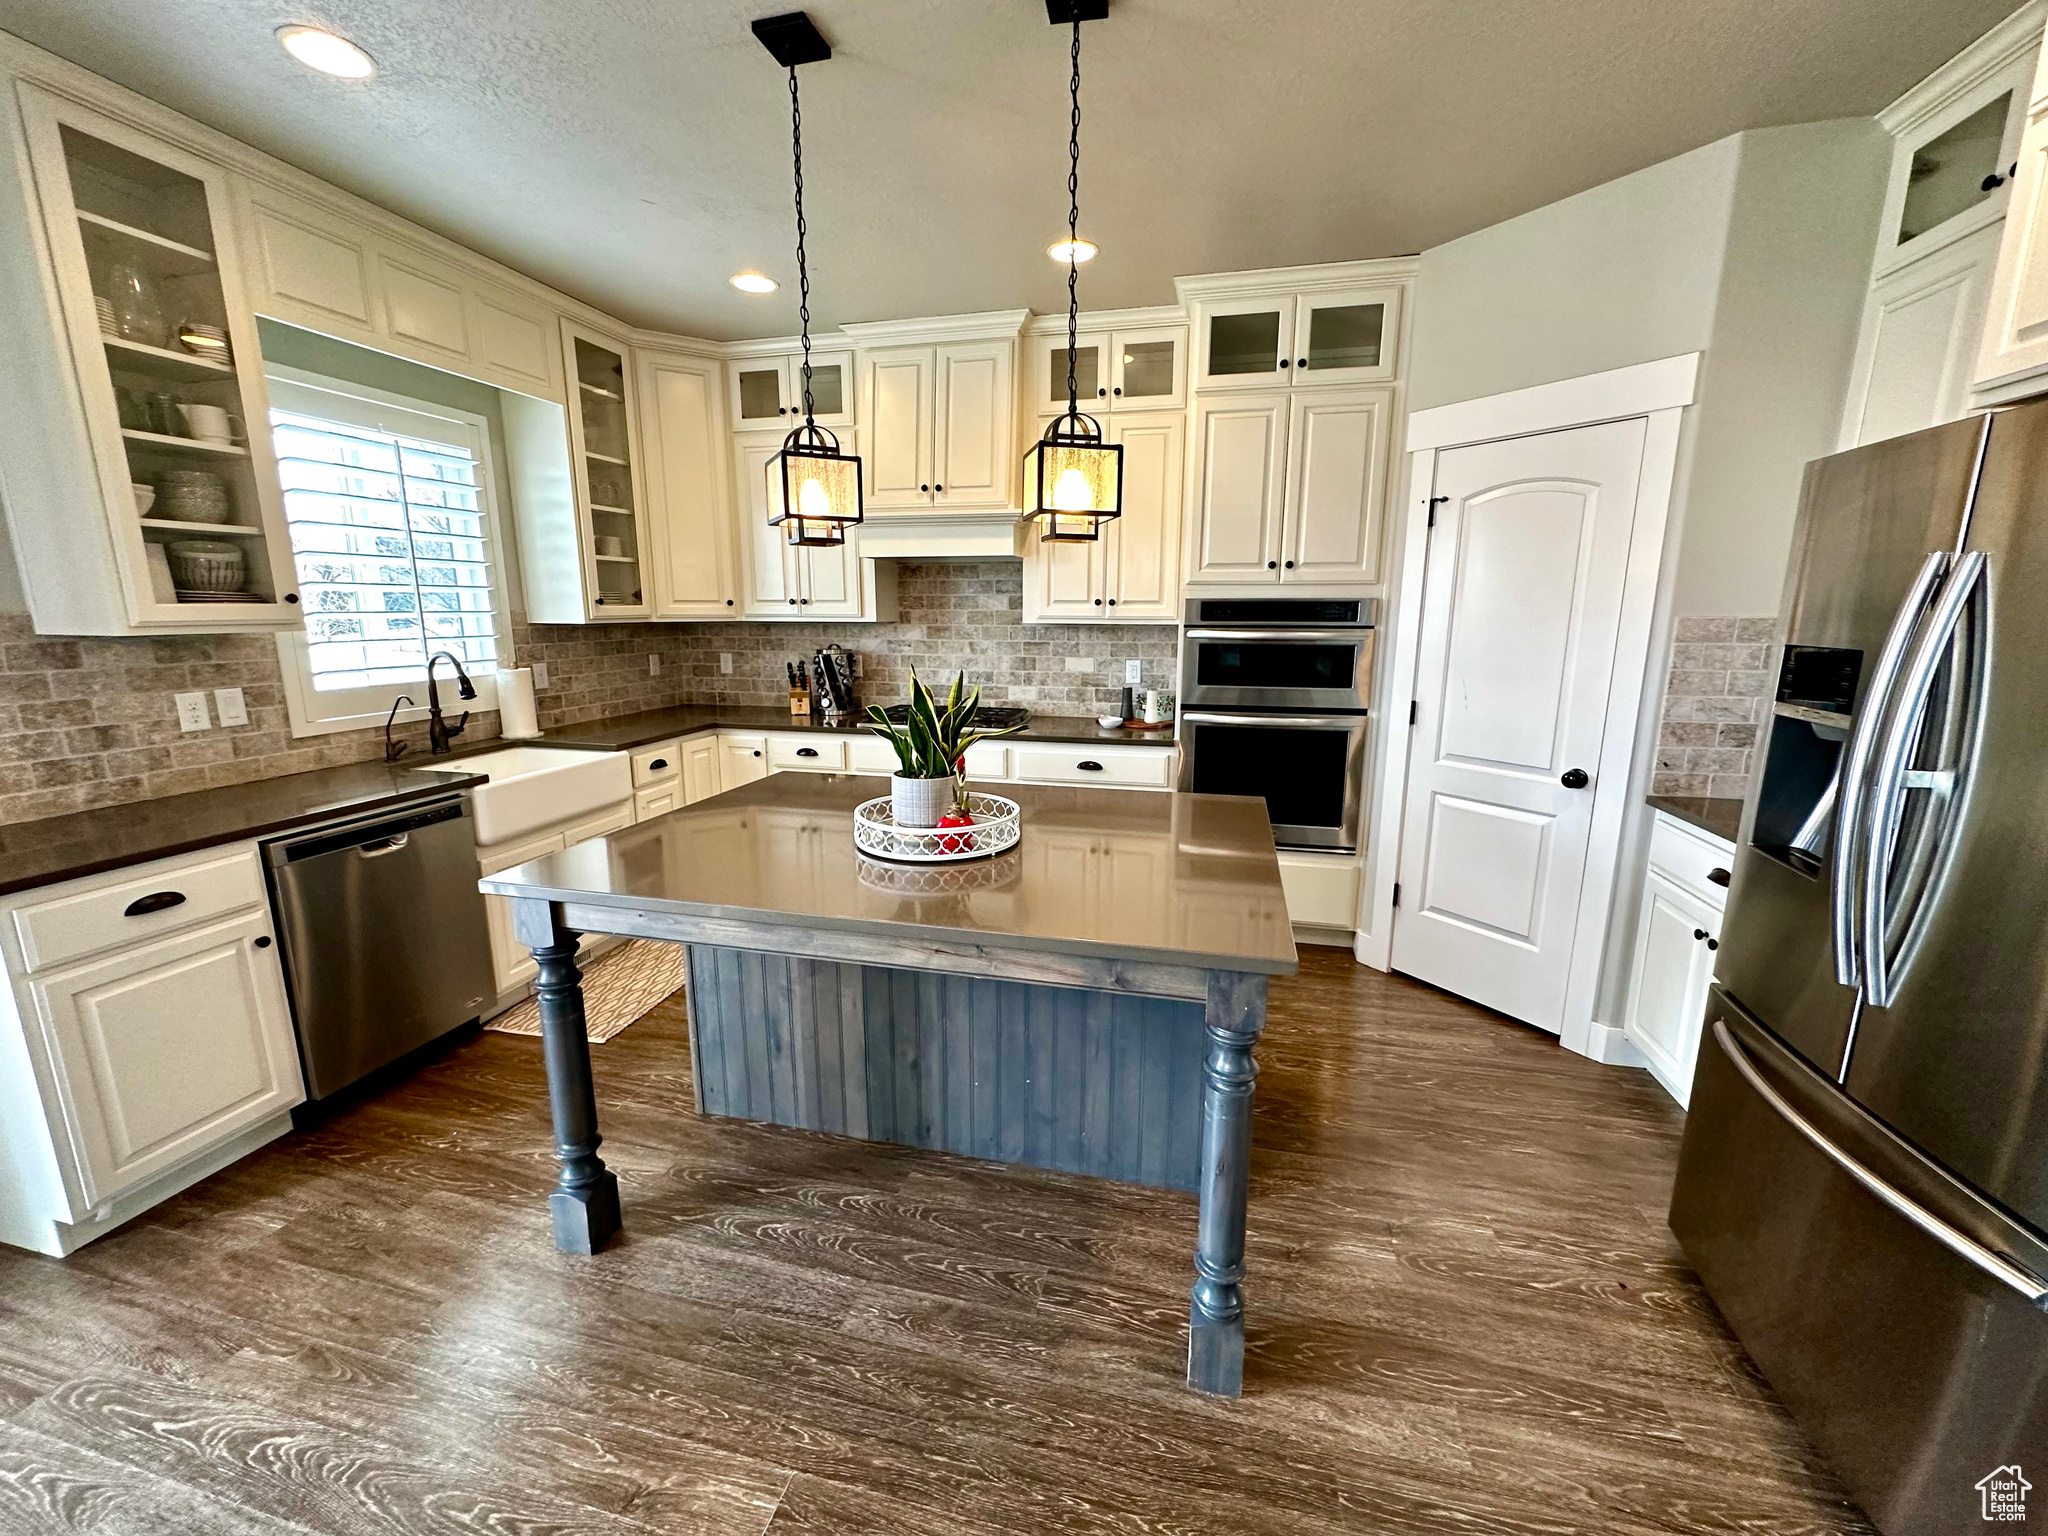 Kitchen featuring dark hardwood / wood-style flooring, stainless steel appliances, backsplash, hanging light fixtures, and a center island